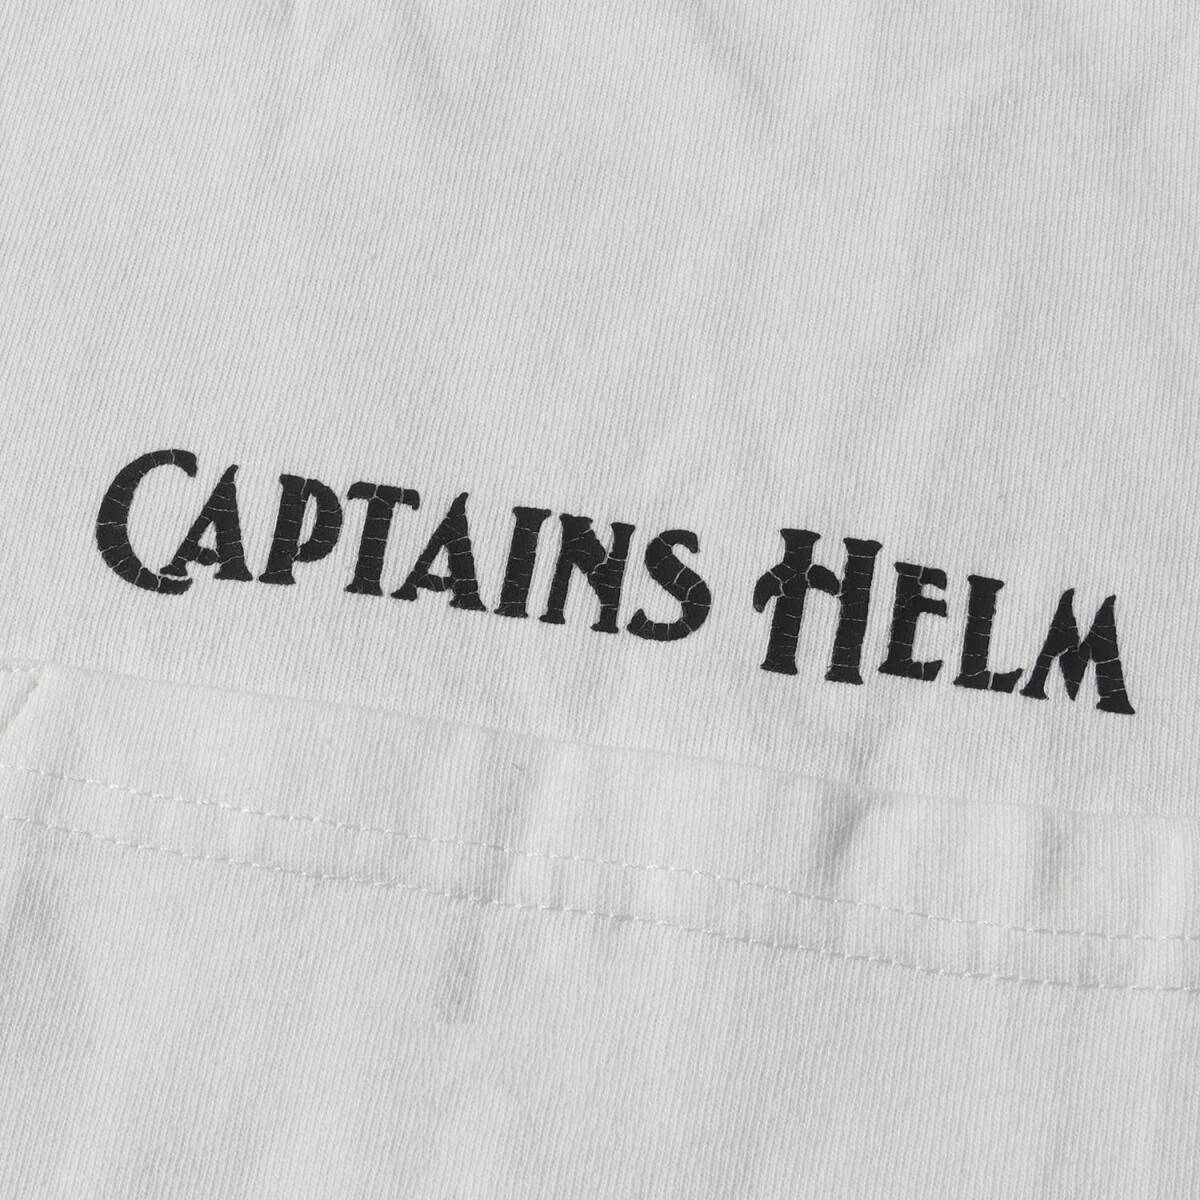 Captains Helm Tokyo Tシャツ サイズ:L 23AW オーバーサイズ 2トーン ポケット Tシャ 2TONE RELAX LOGO TEE ホワイト ブラック_画像4